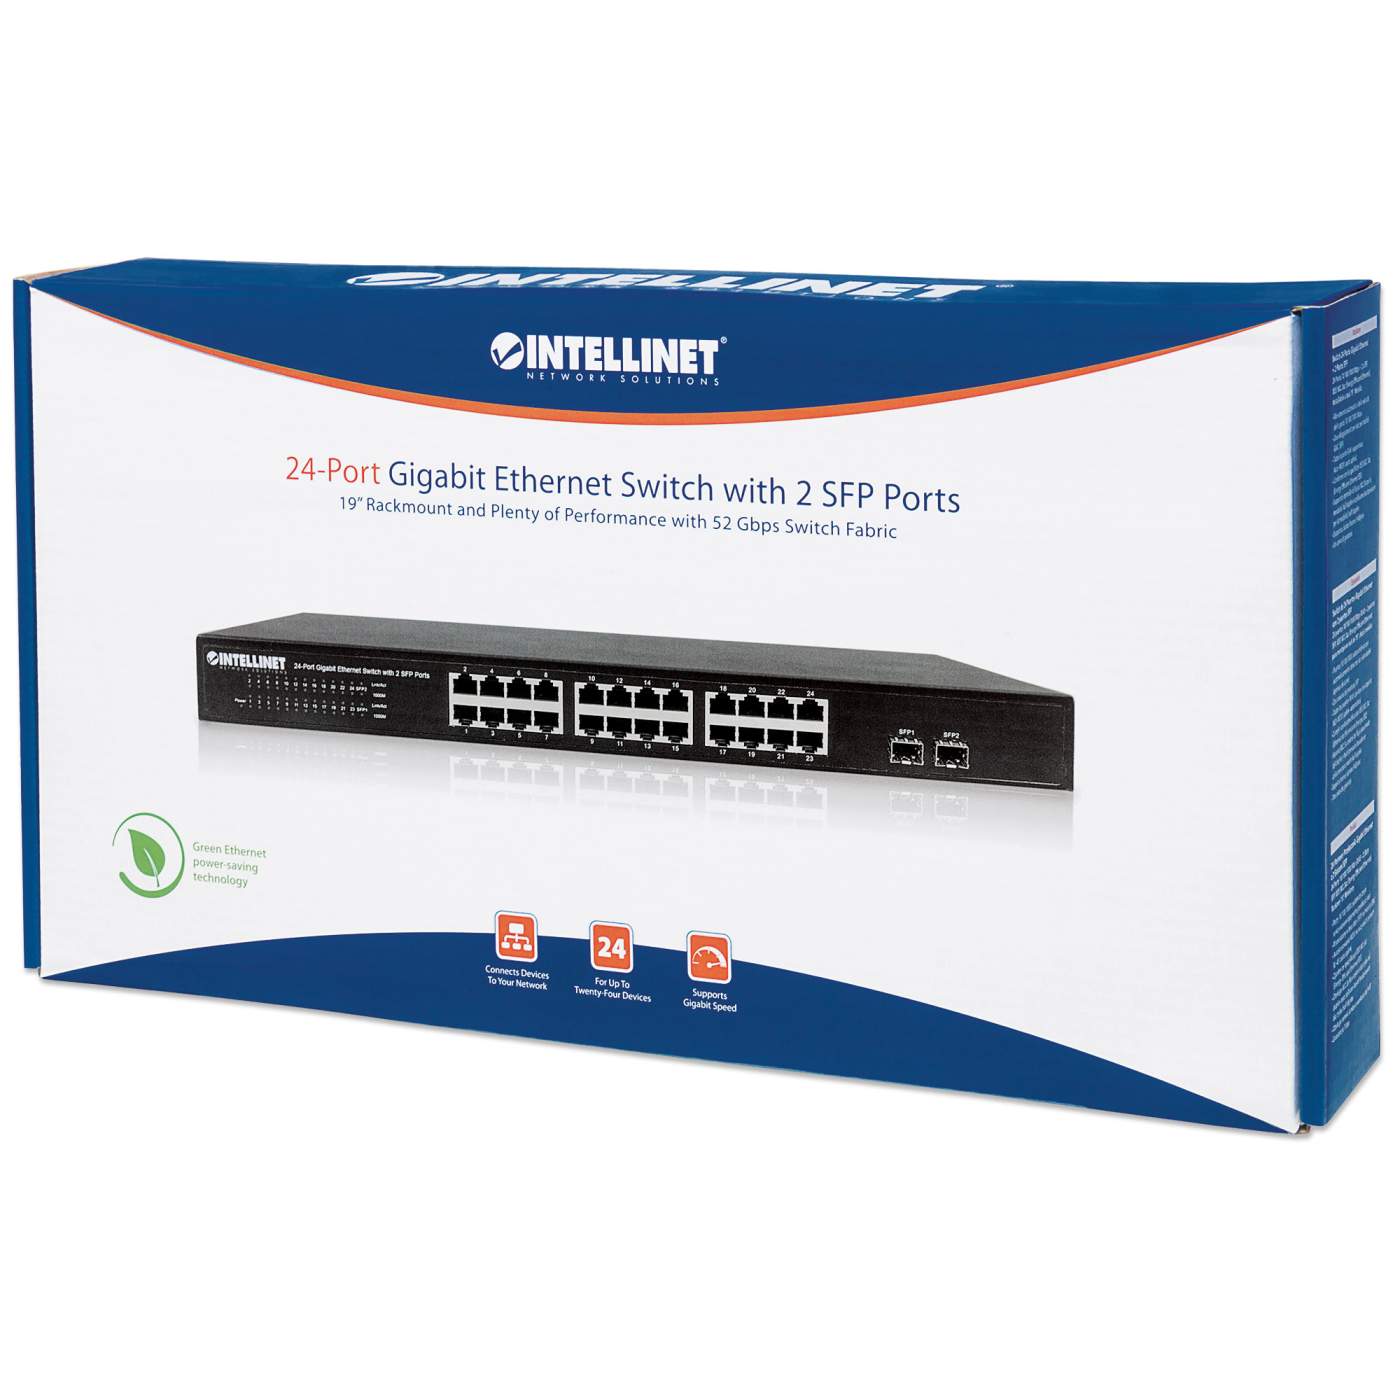 Intellinet 24-Port Gigabit Ethernet Switch (561273)